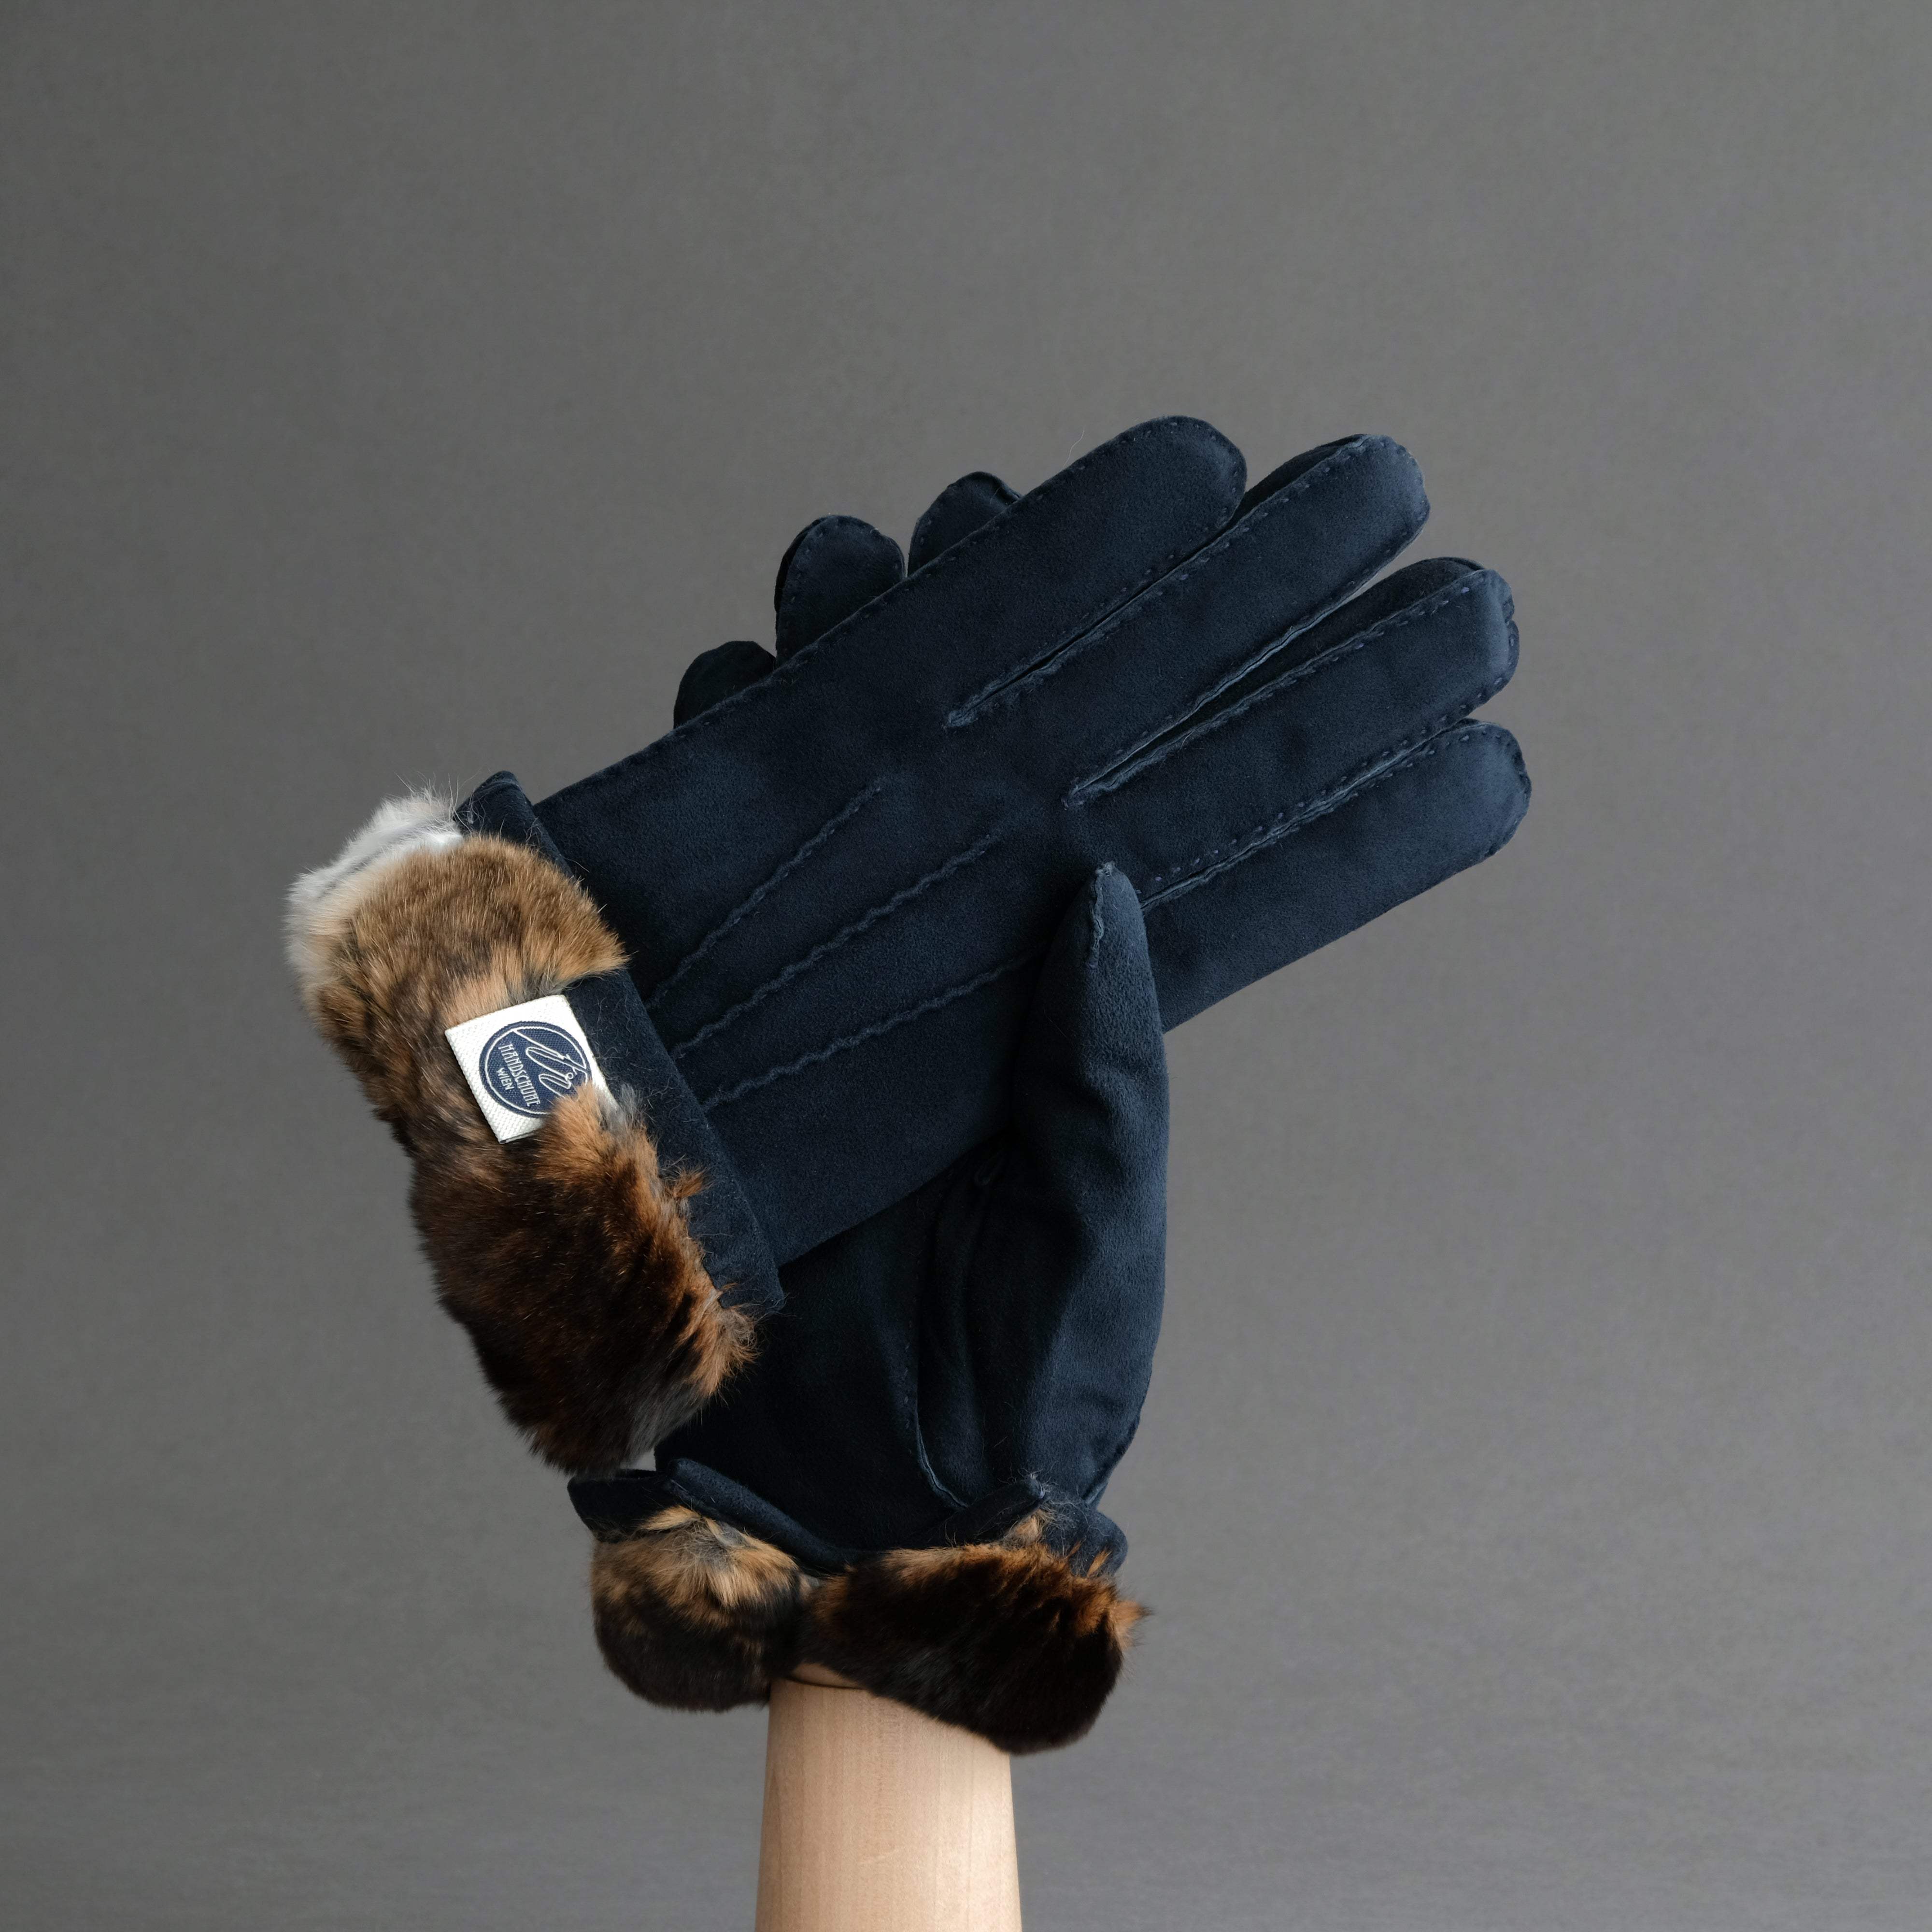 Gentlemen's Gloves from Dark Blue Reindeer Suede Lined with Orylag Fur - TR Handschuhe Wien - Thomas Riemer Handmade Gloves